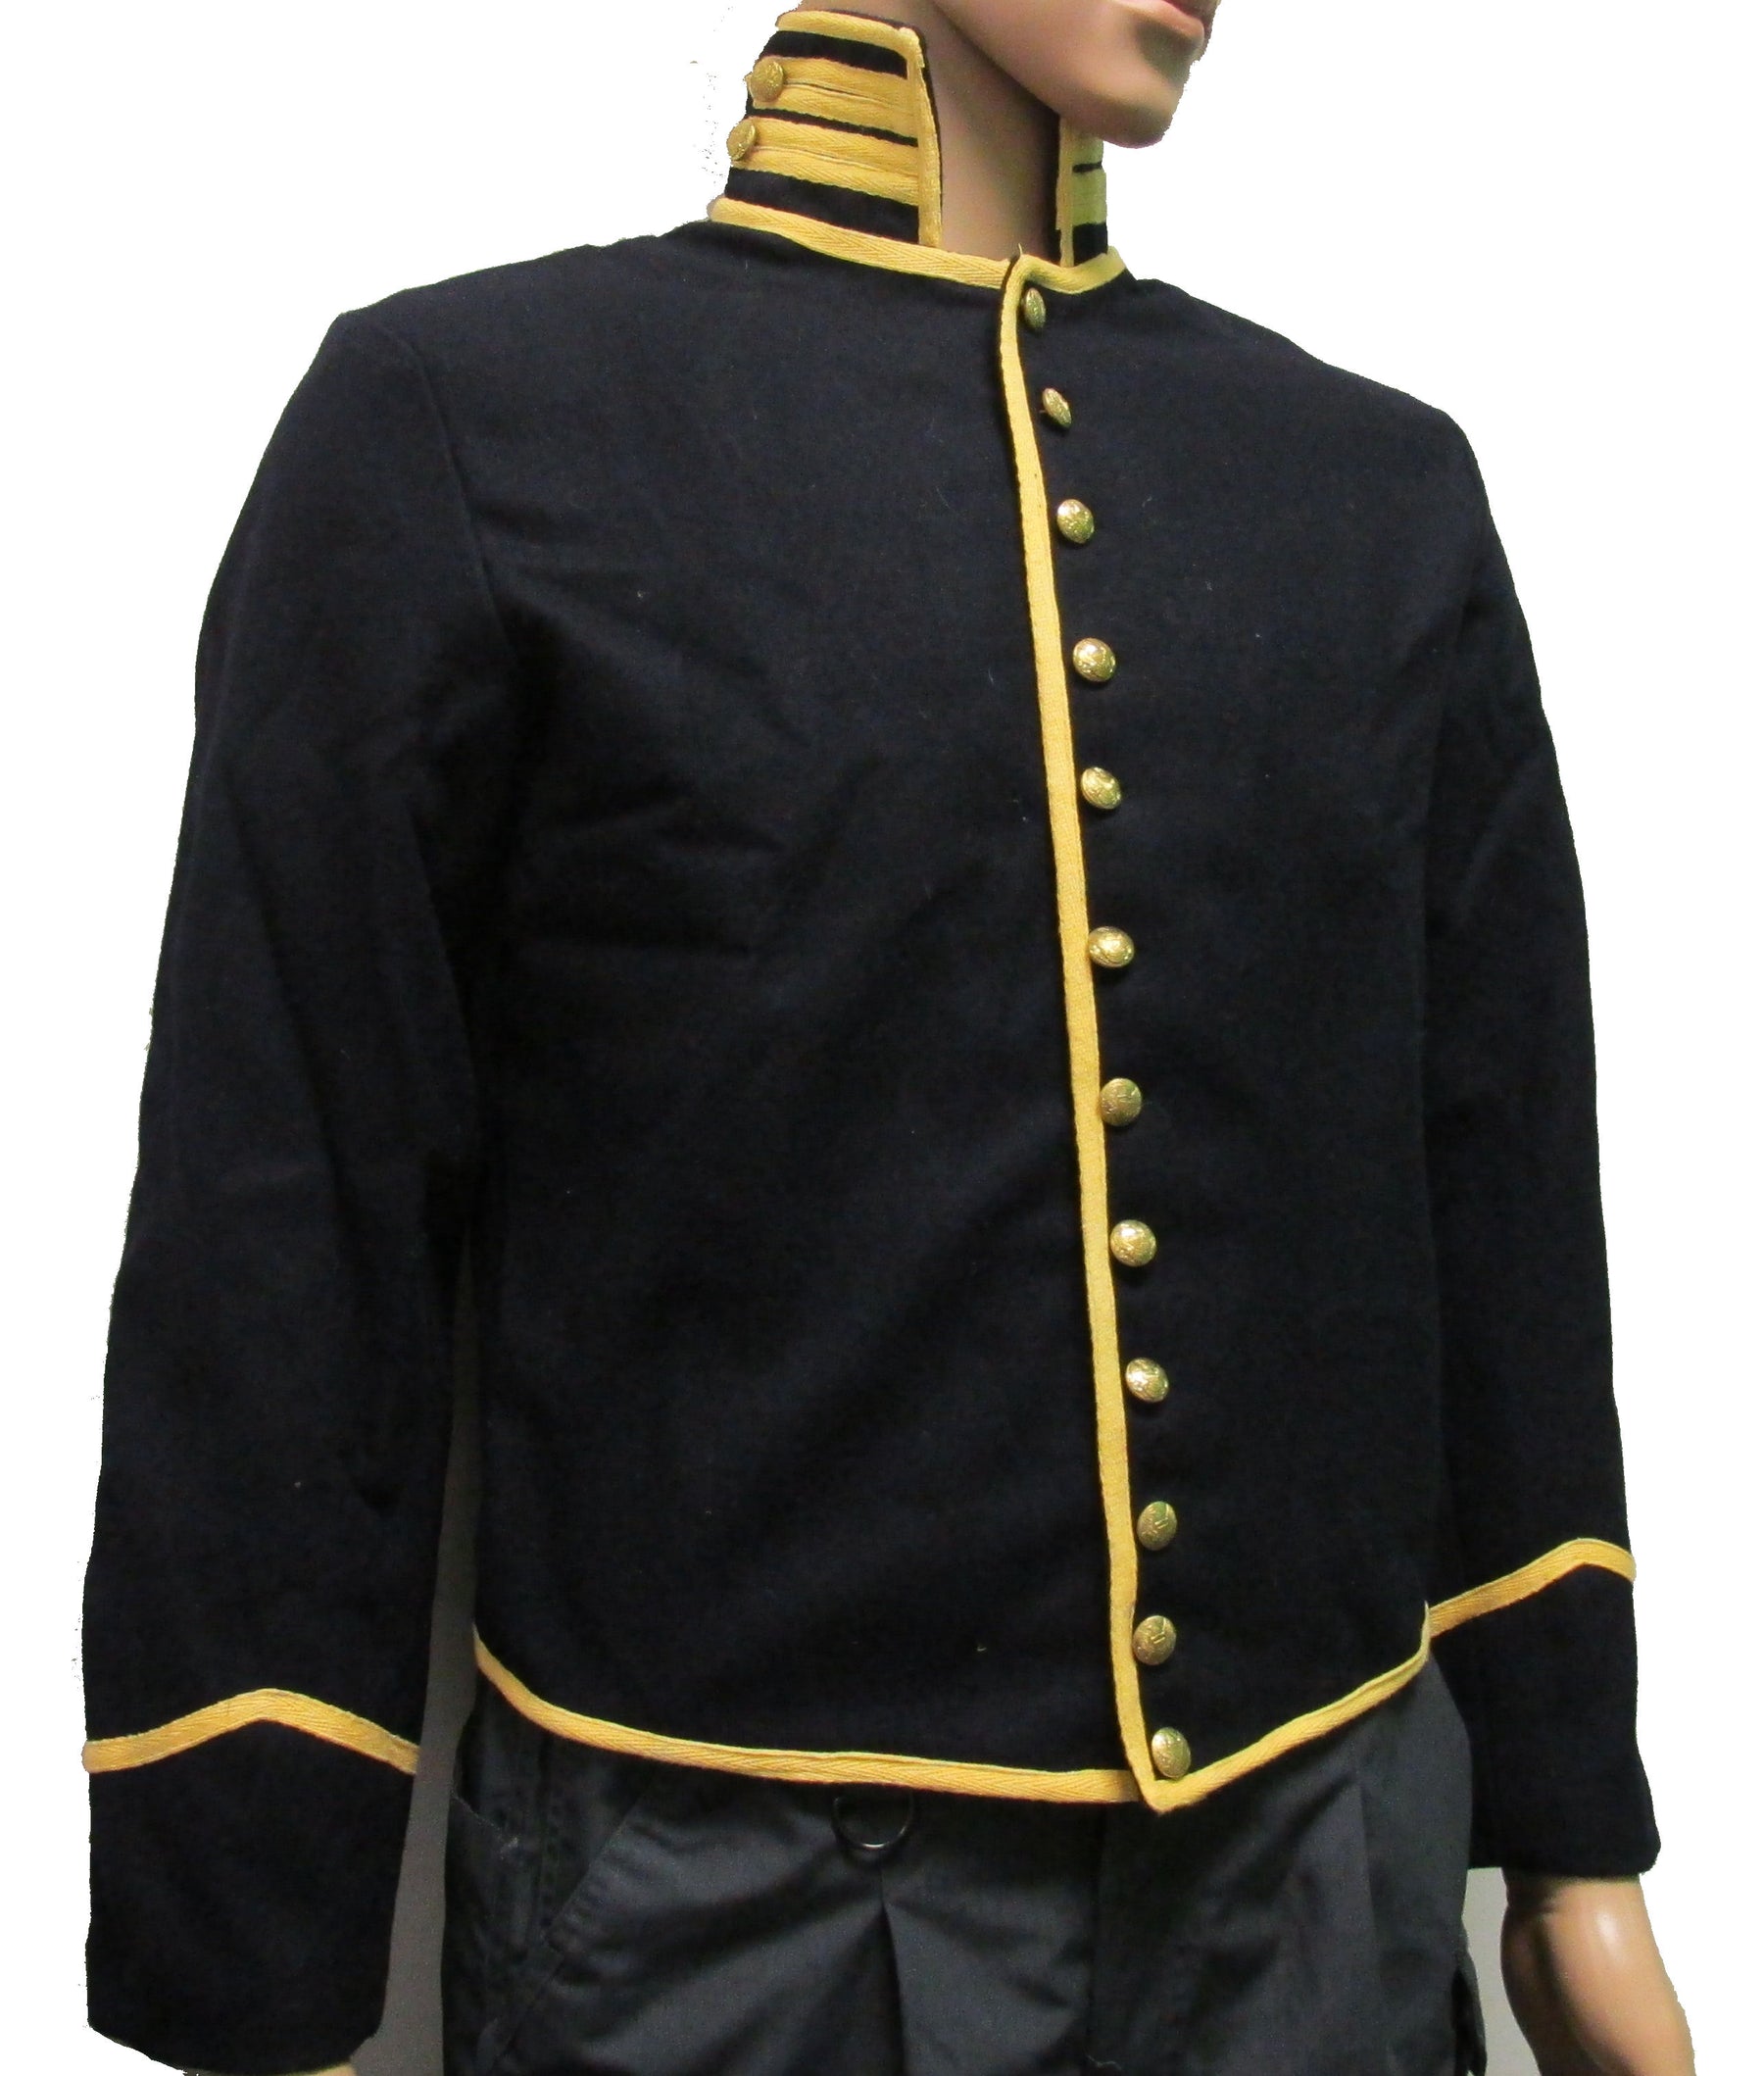 Civil War Reenactment Clothing & Accessories